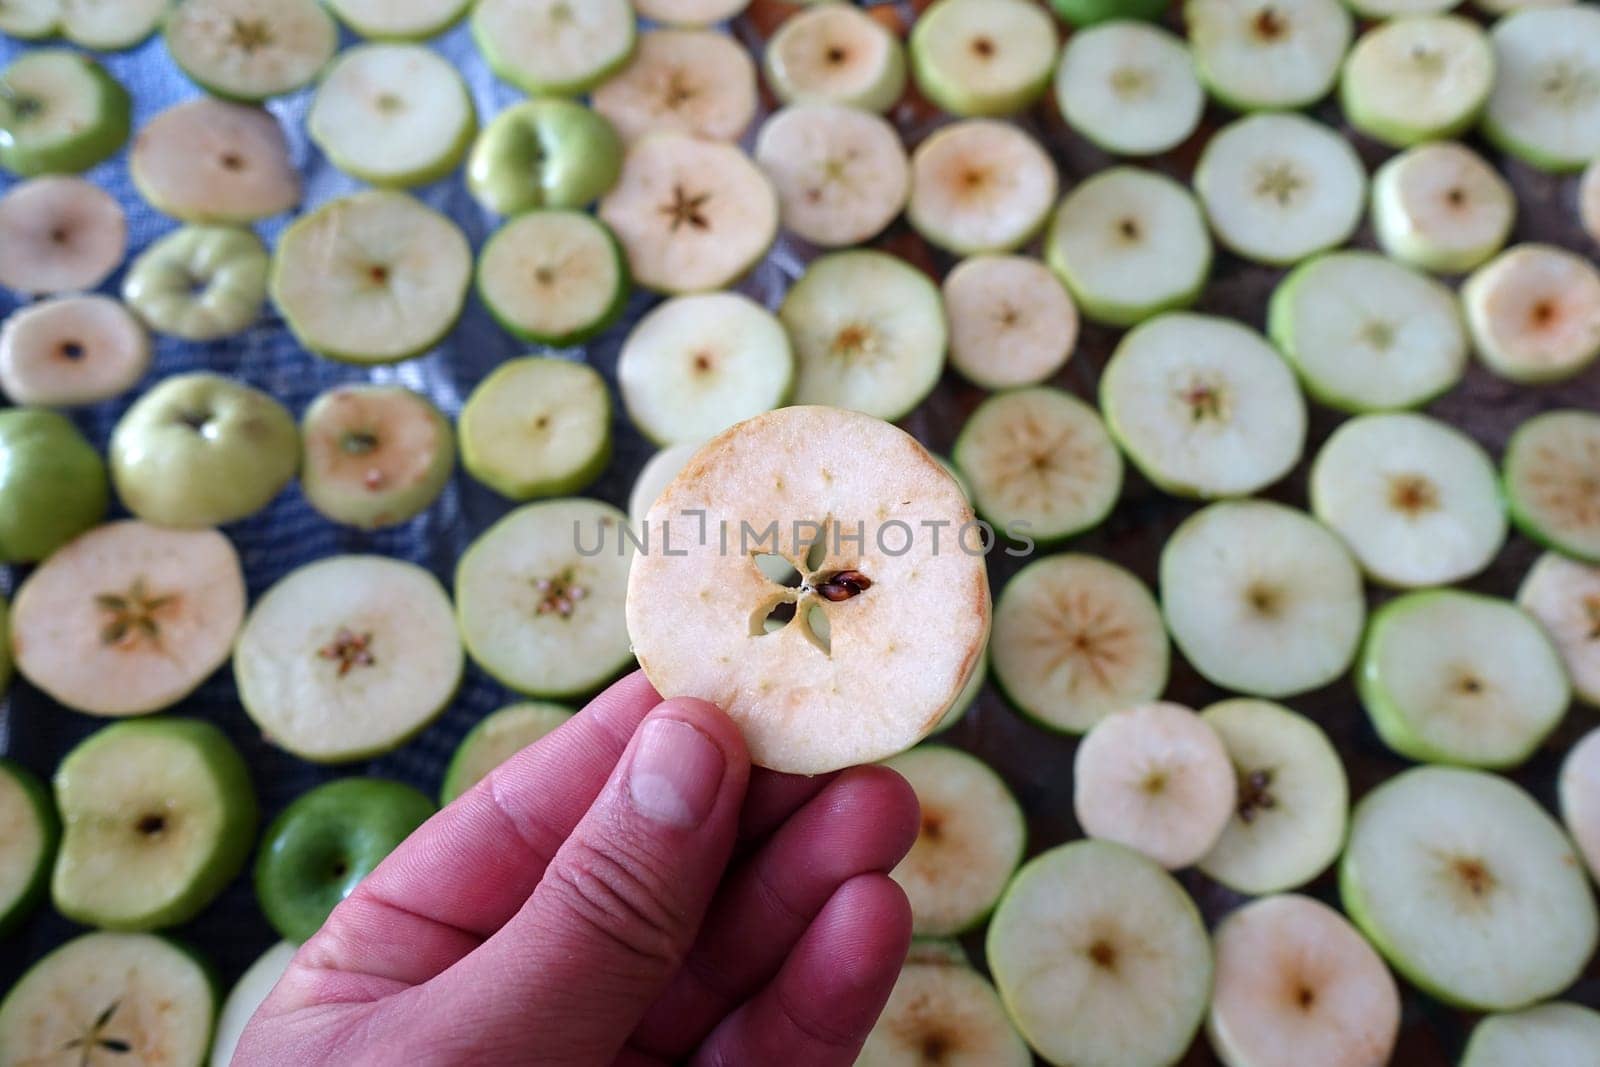 drying homemade apples, drying apples, sliced apple slices left to dry,